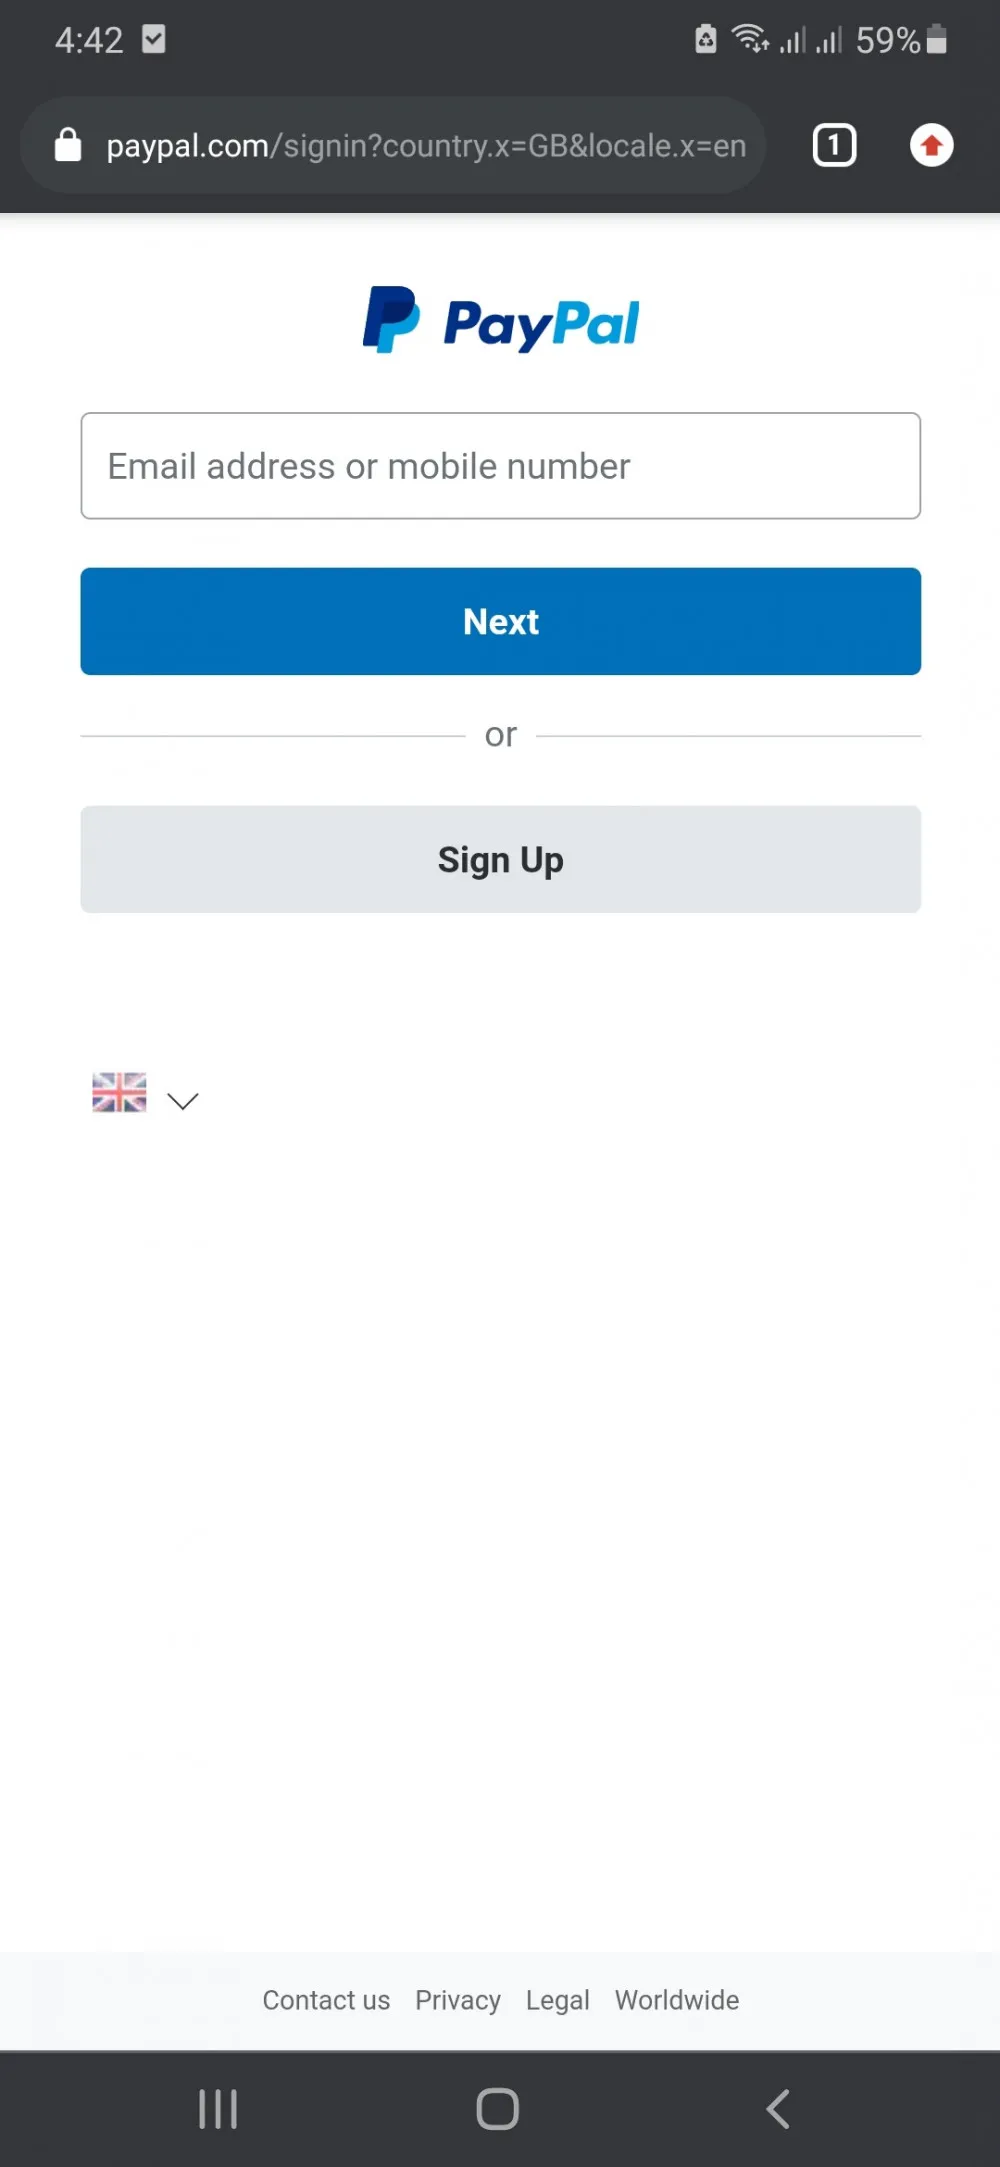 PayPal mobile site login